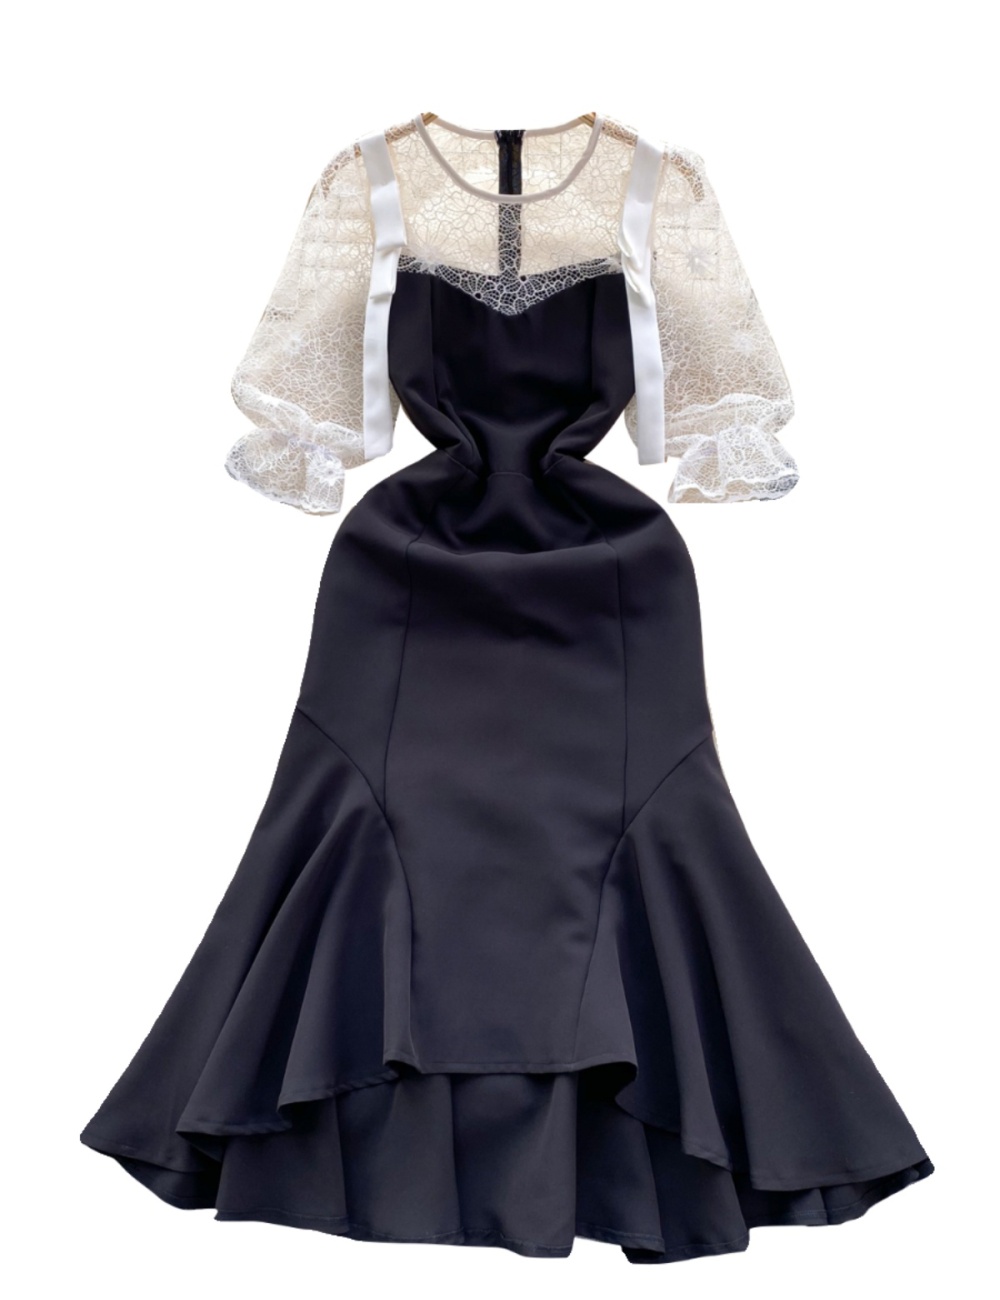 Lace temperament dress splice France style formal dress